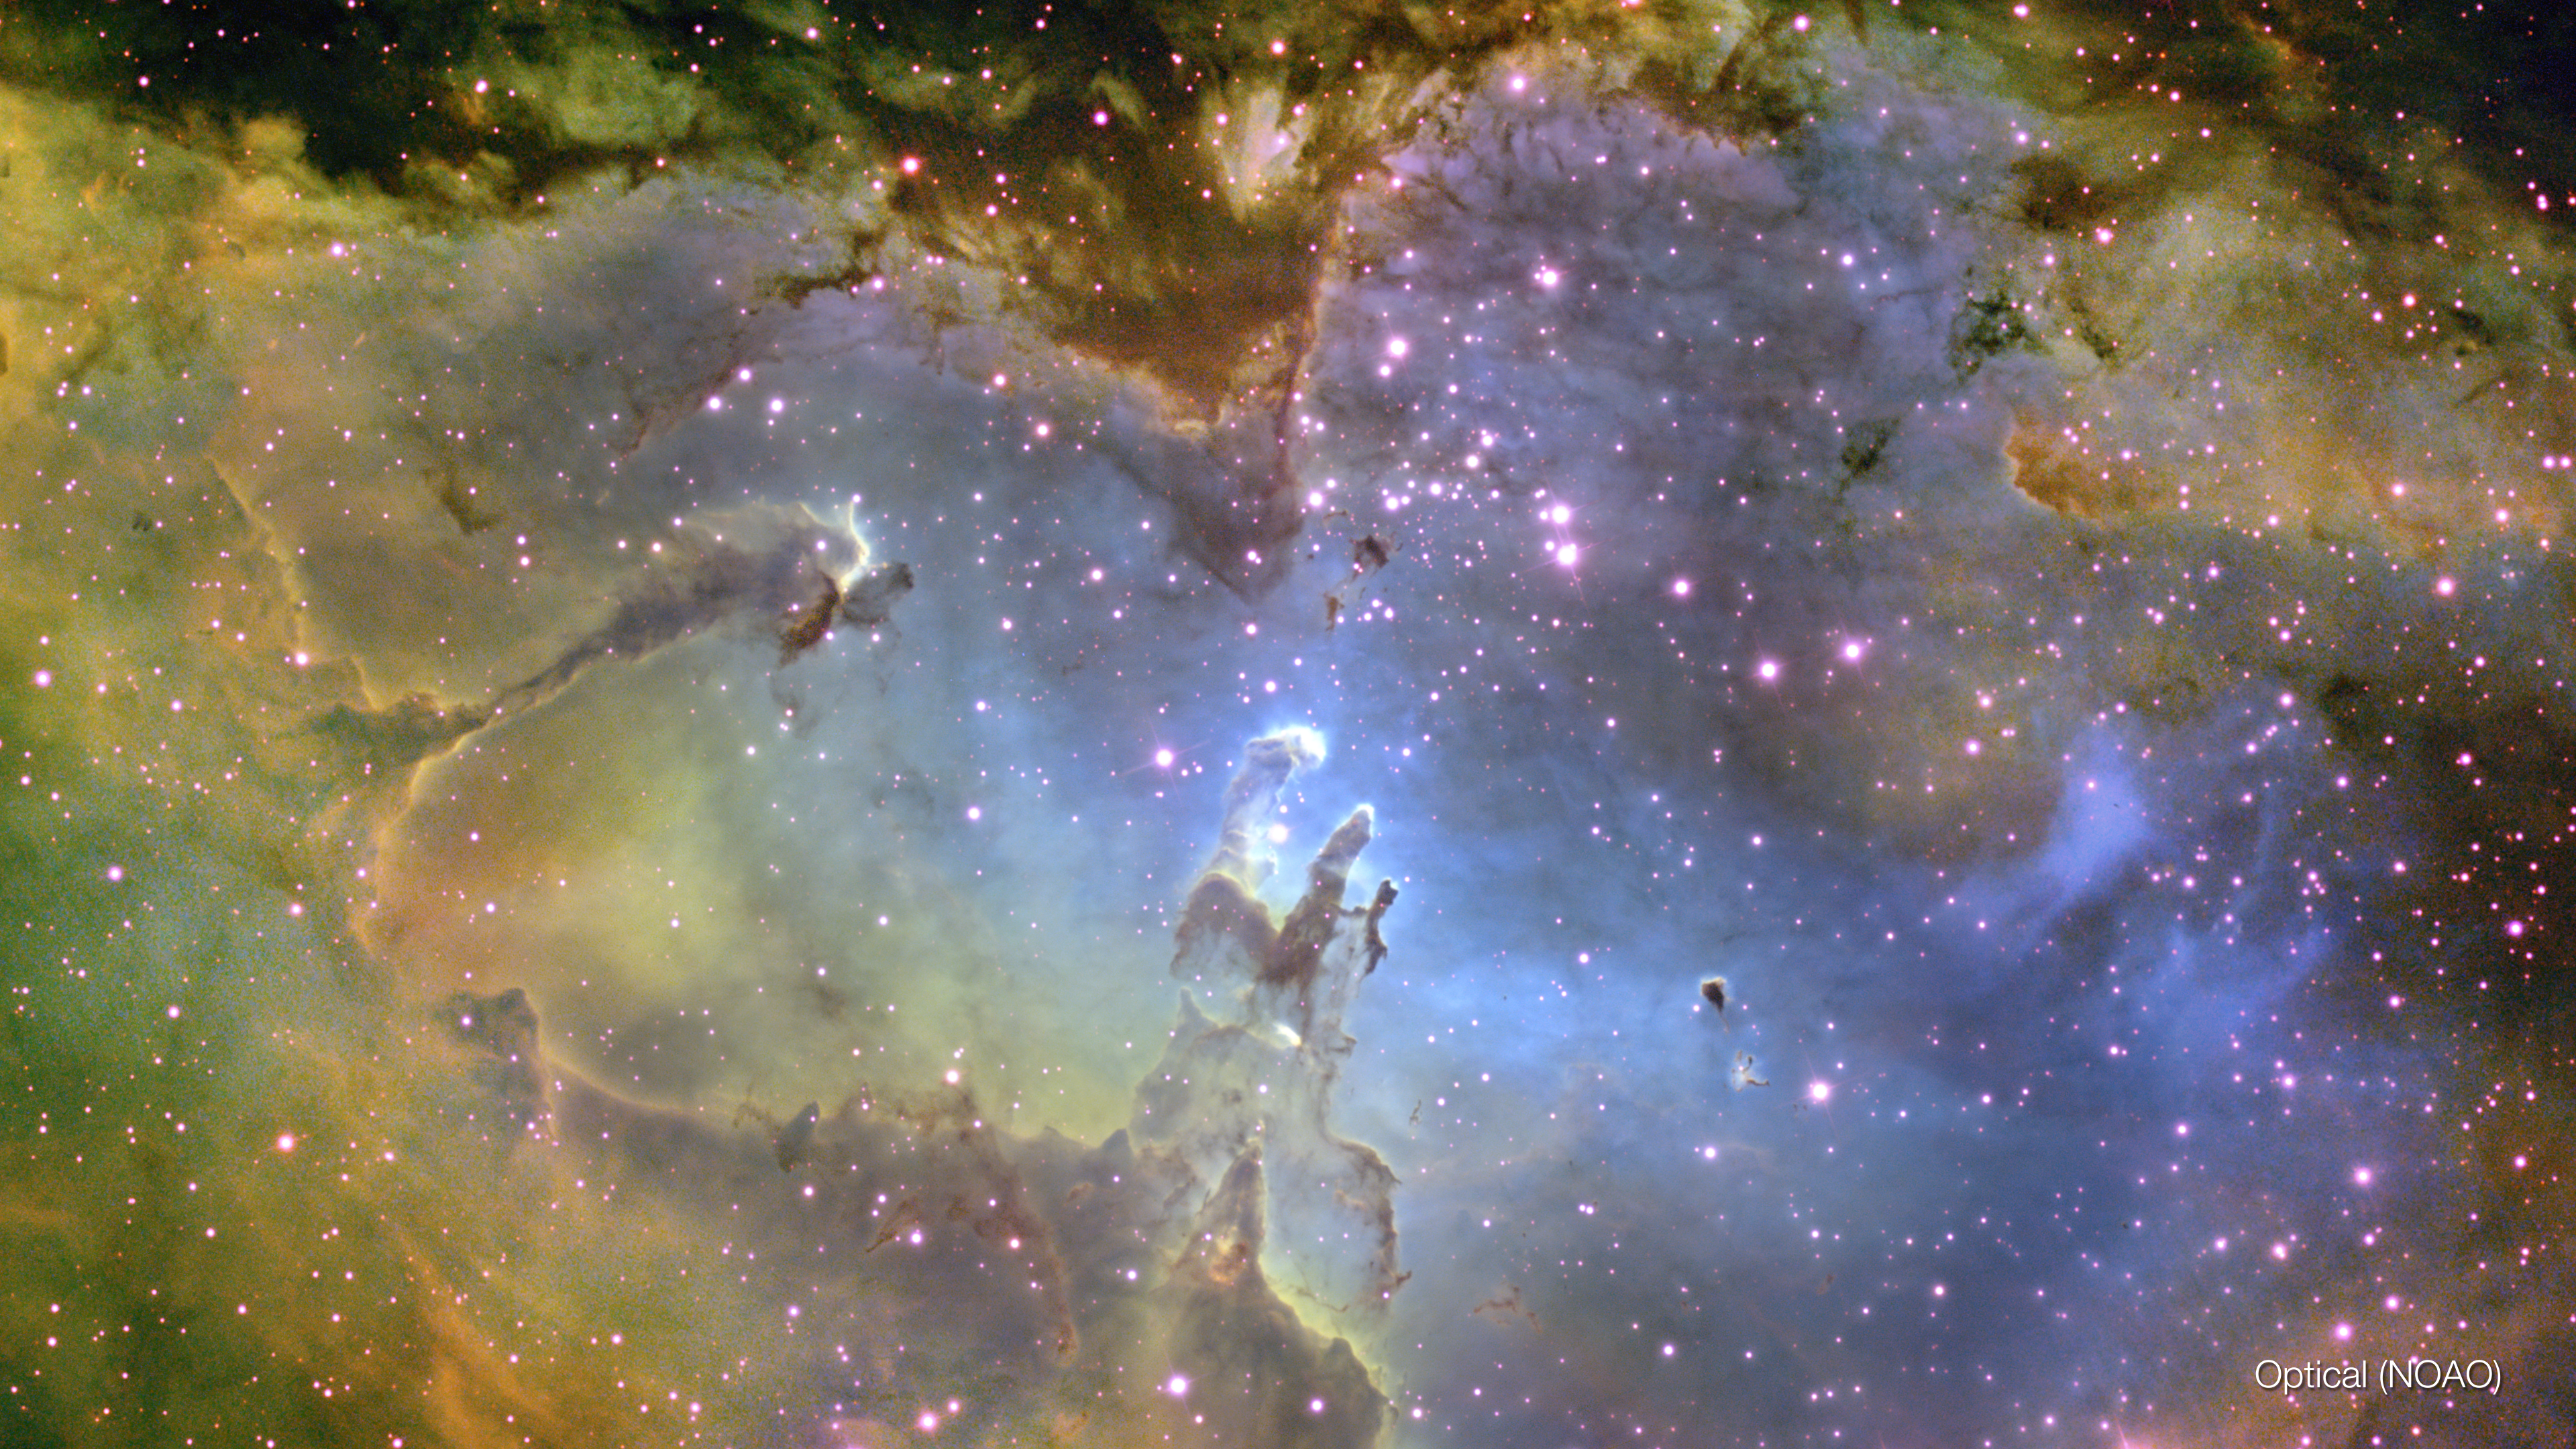 Eagle Nebula M16 NASA Hubble Space Telescope astronomy print picture &FREE PHOTO 